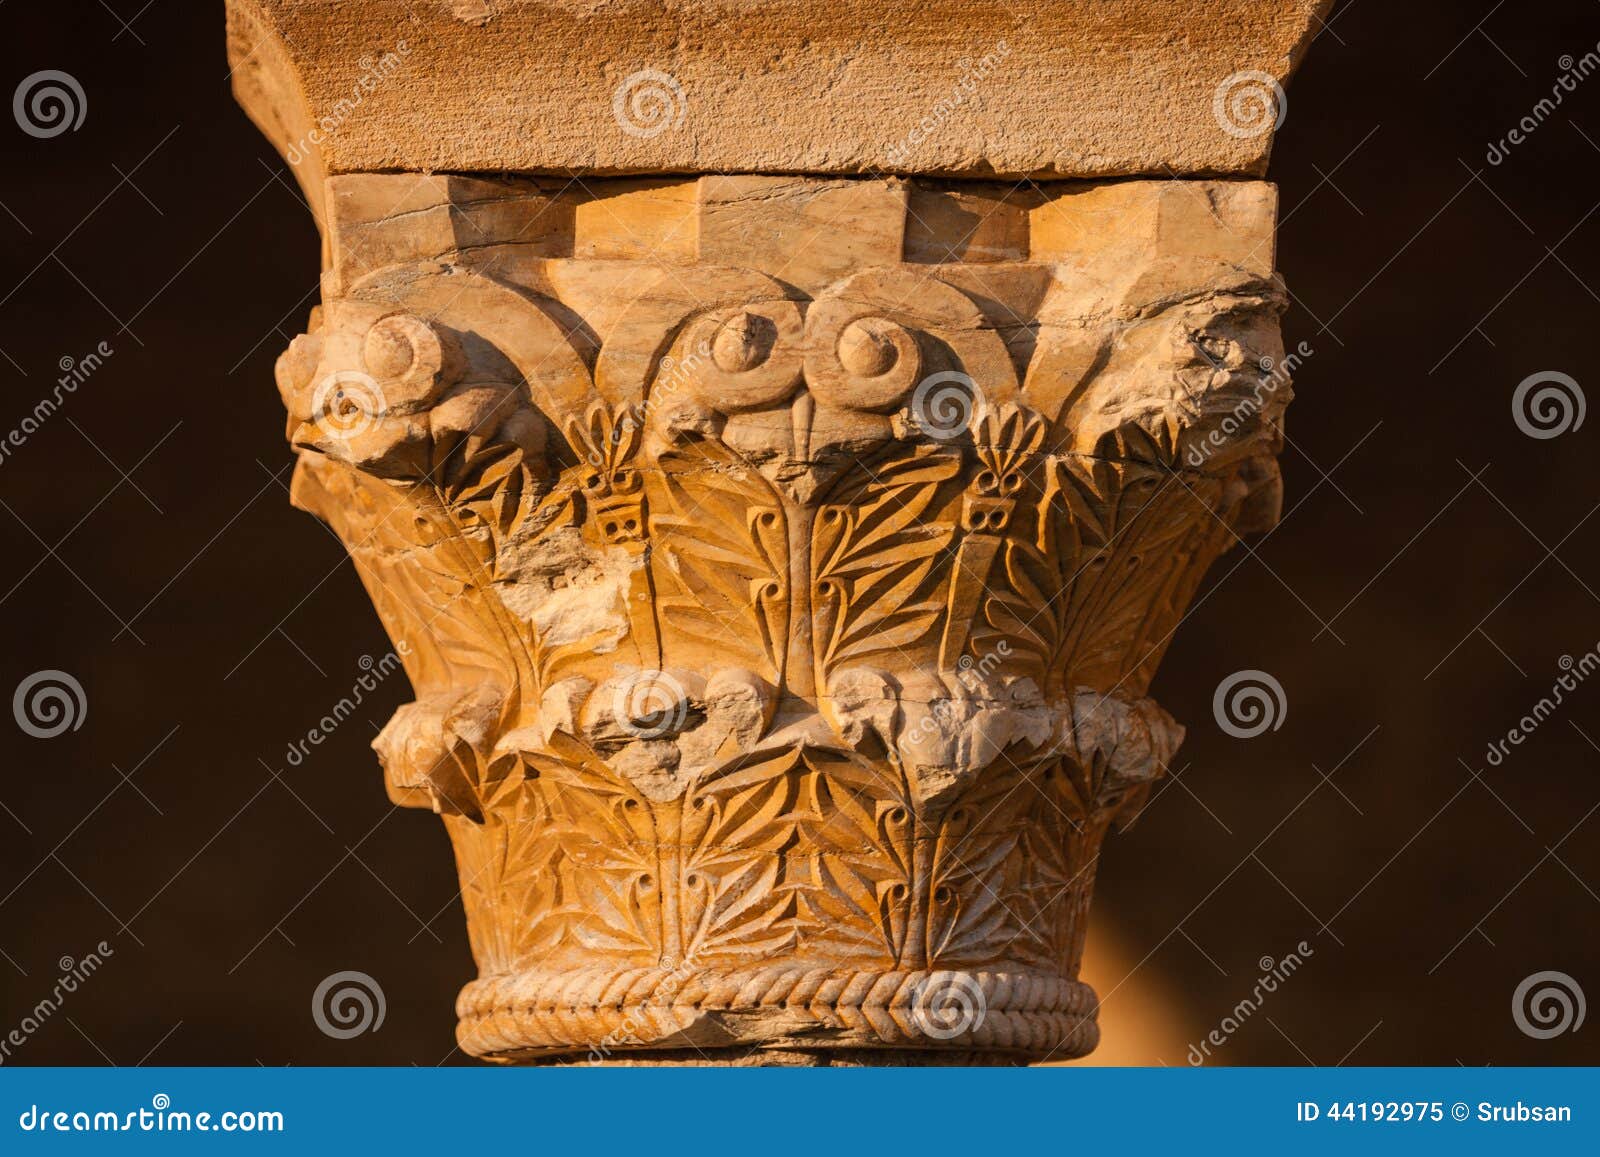 beautiful romanesque capital closeup view